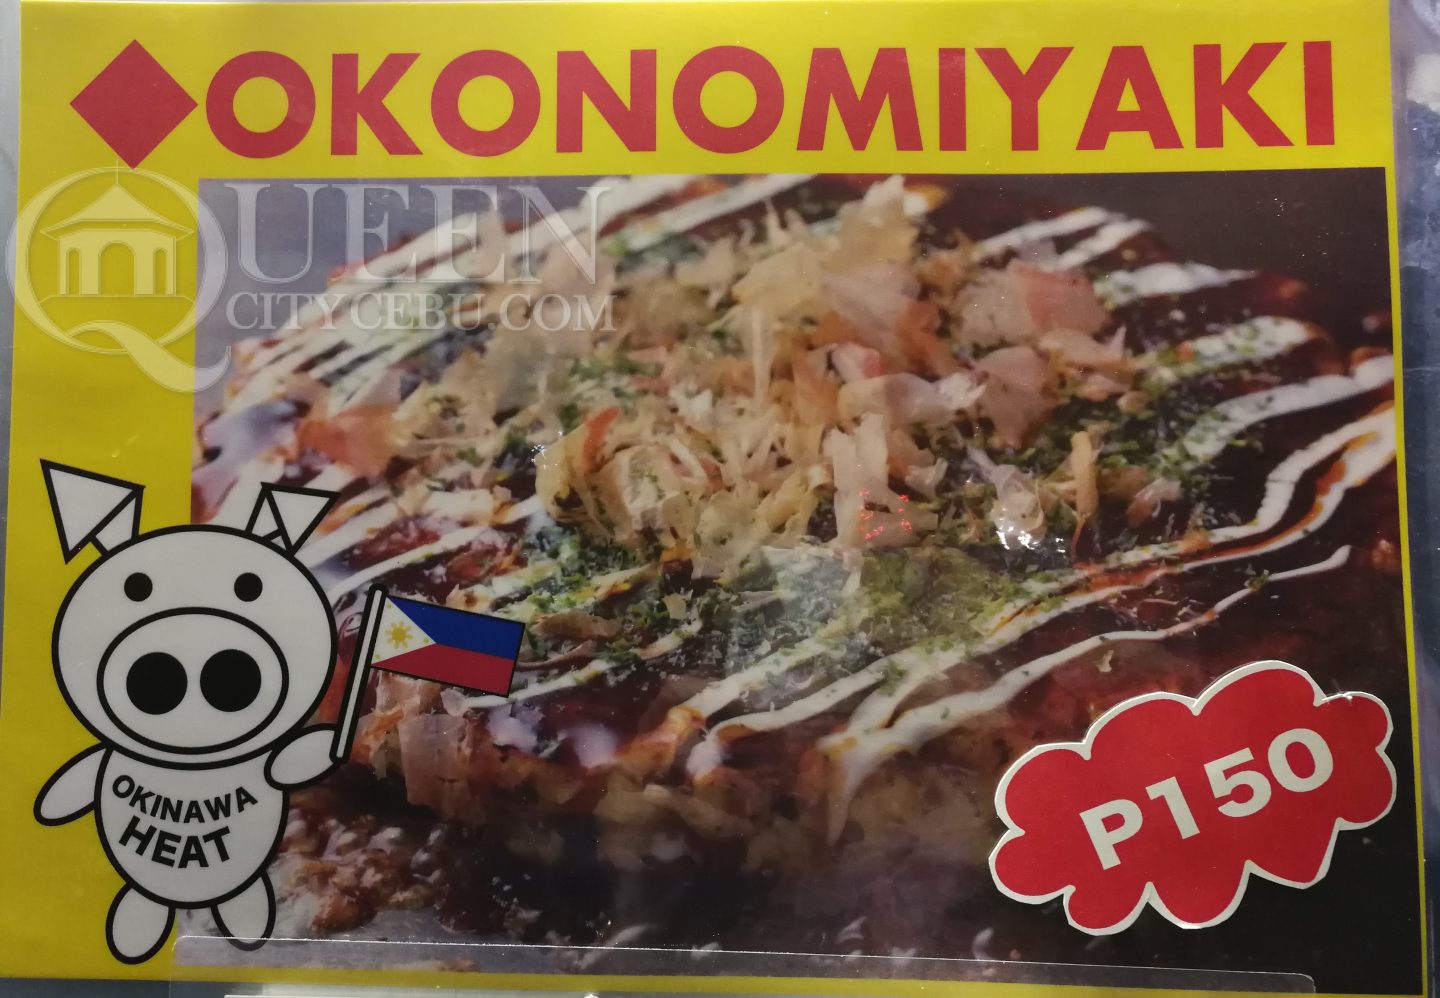 Japanese Pancake Okonomiyaki at Okinawa Heat Japanese Food Truck